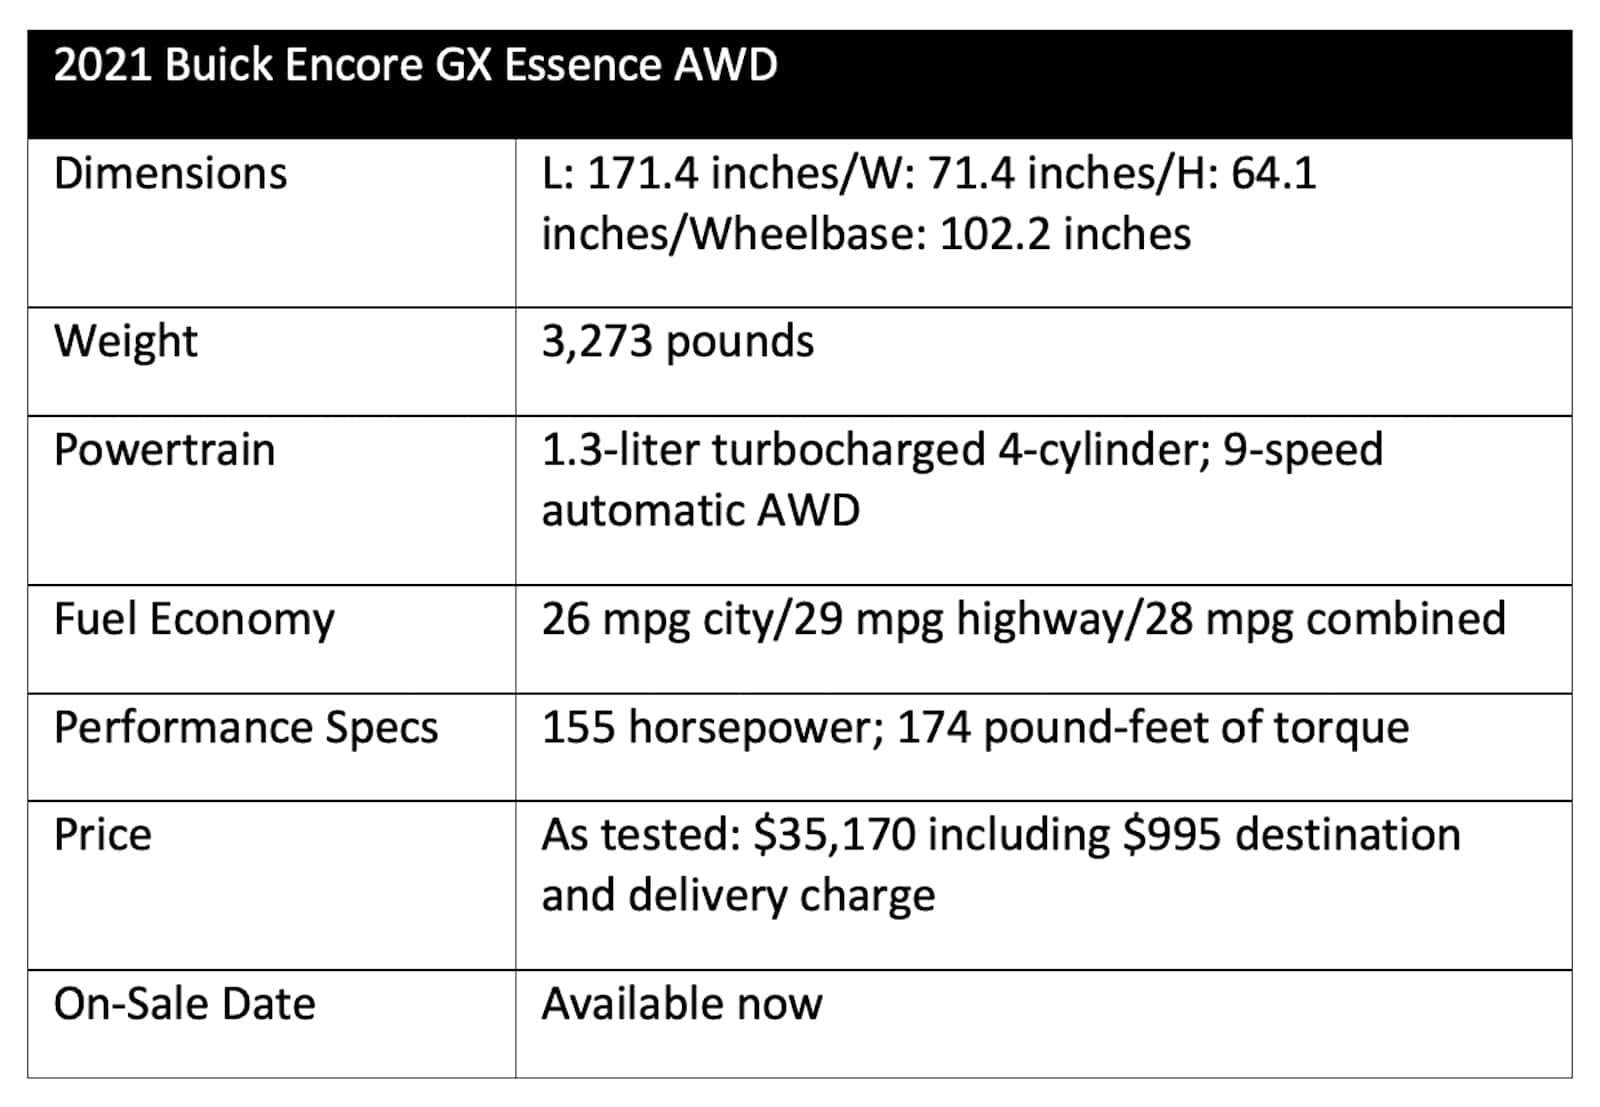 2021 Buick Encore GX Essence AWD chart